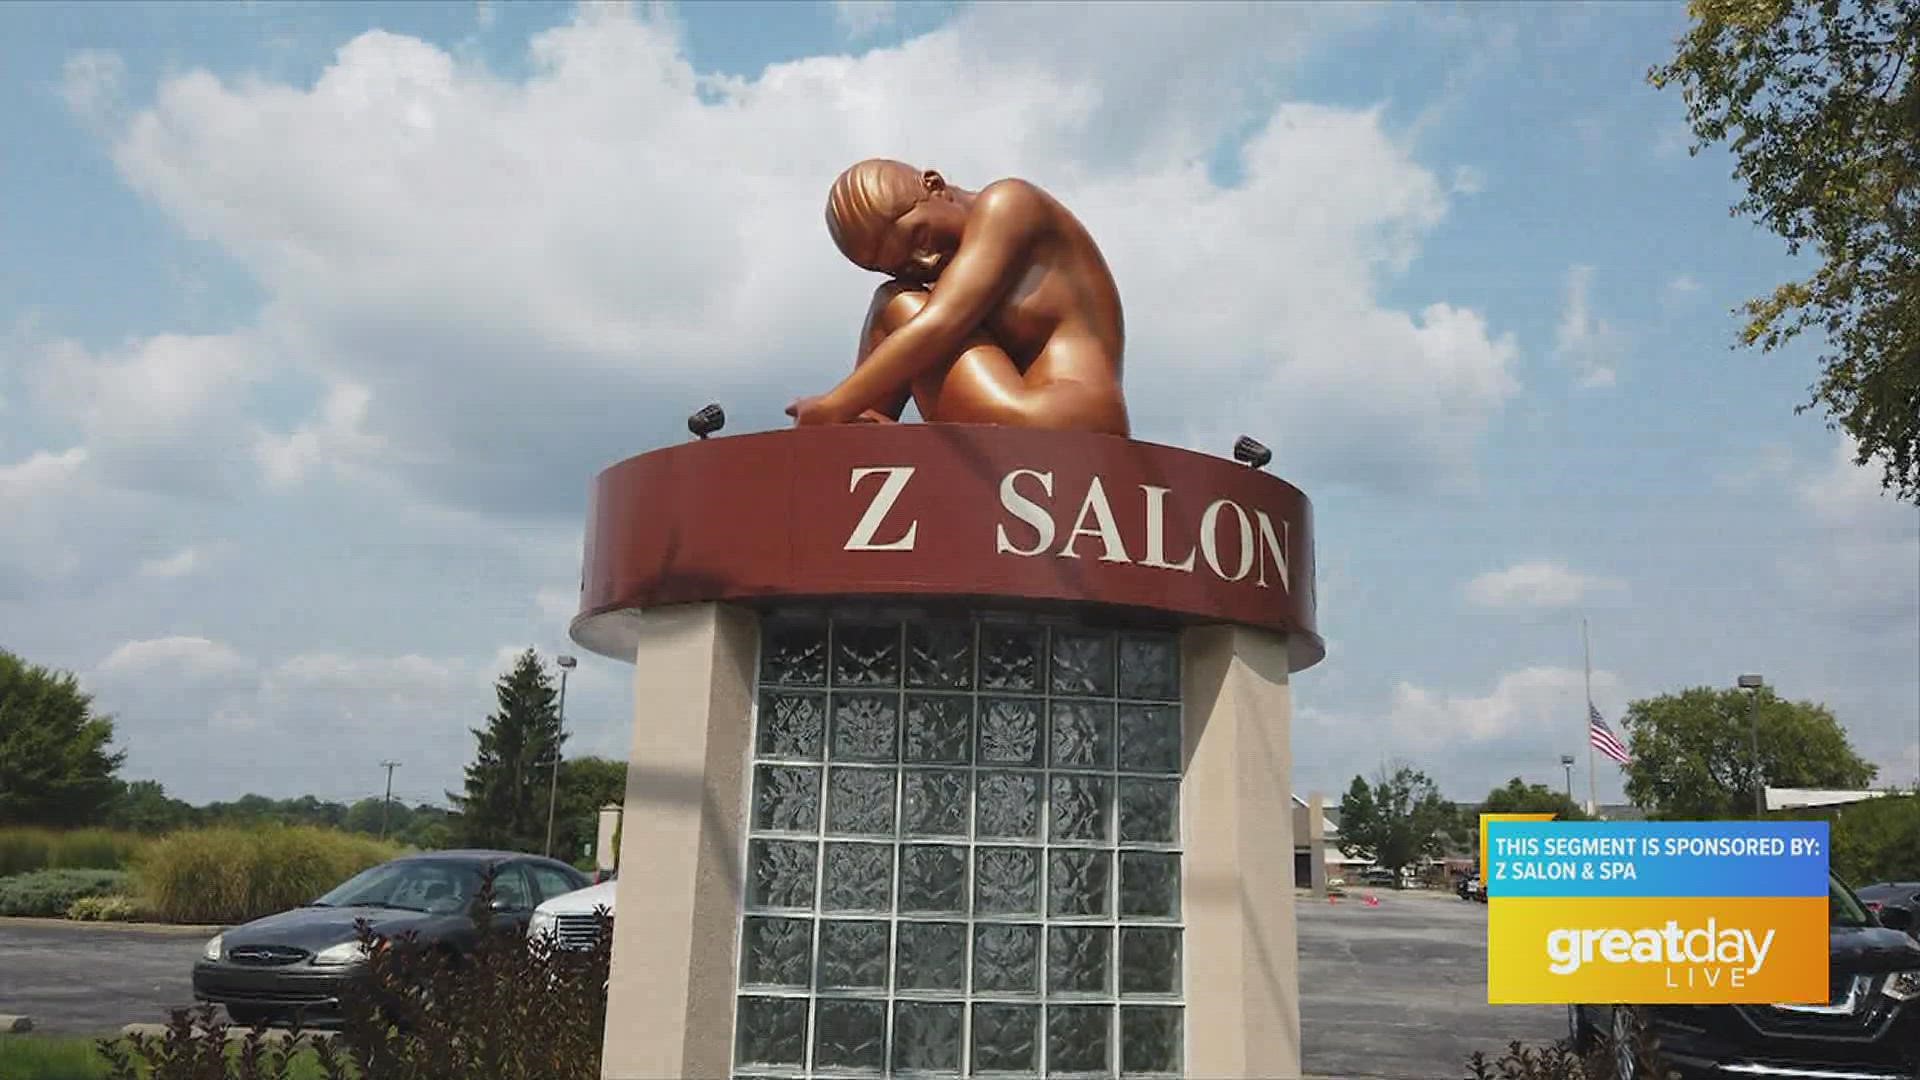 To learn more about Z Salon & Spa, visit ZSalon.com.